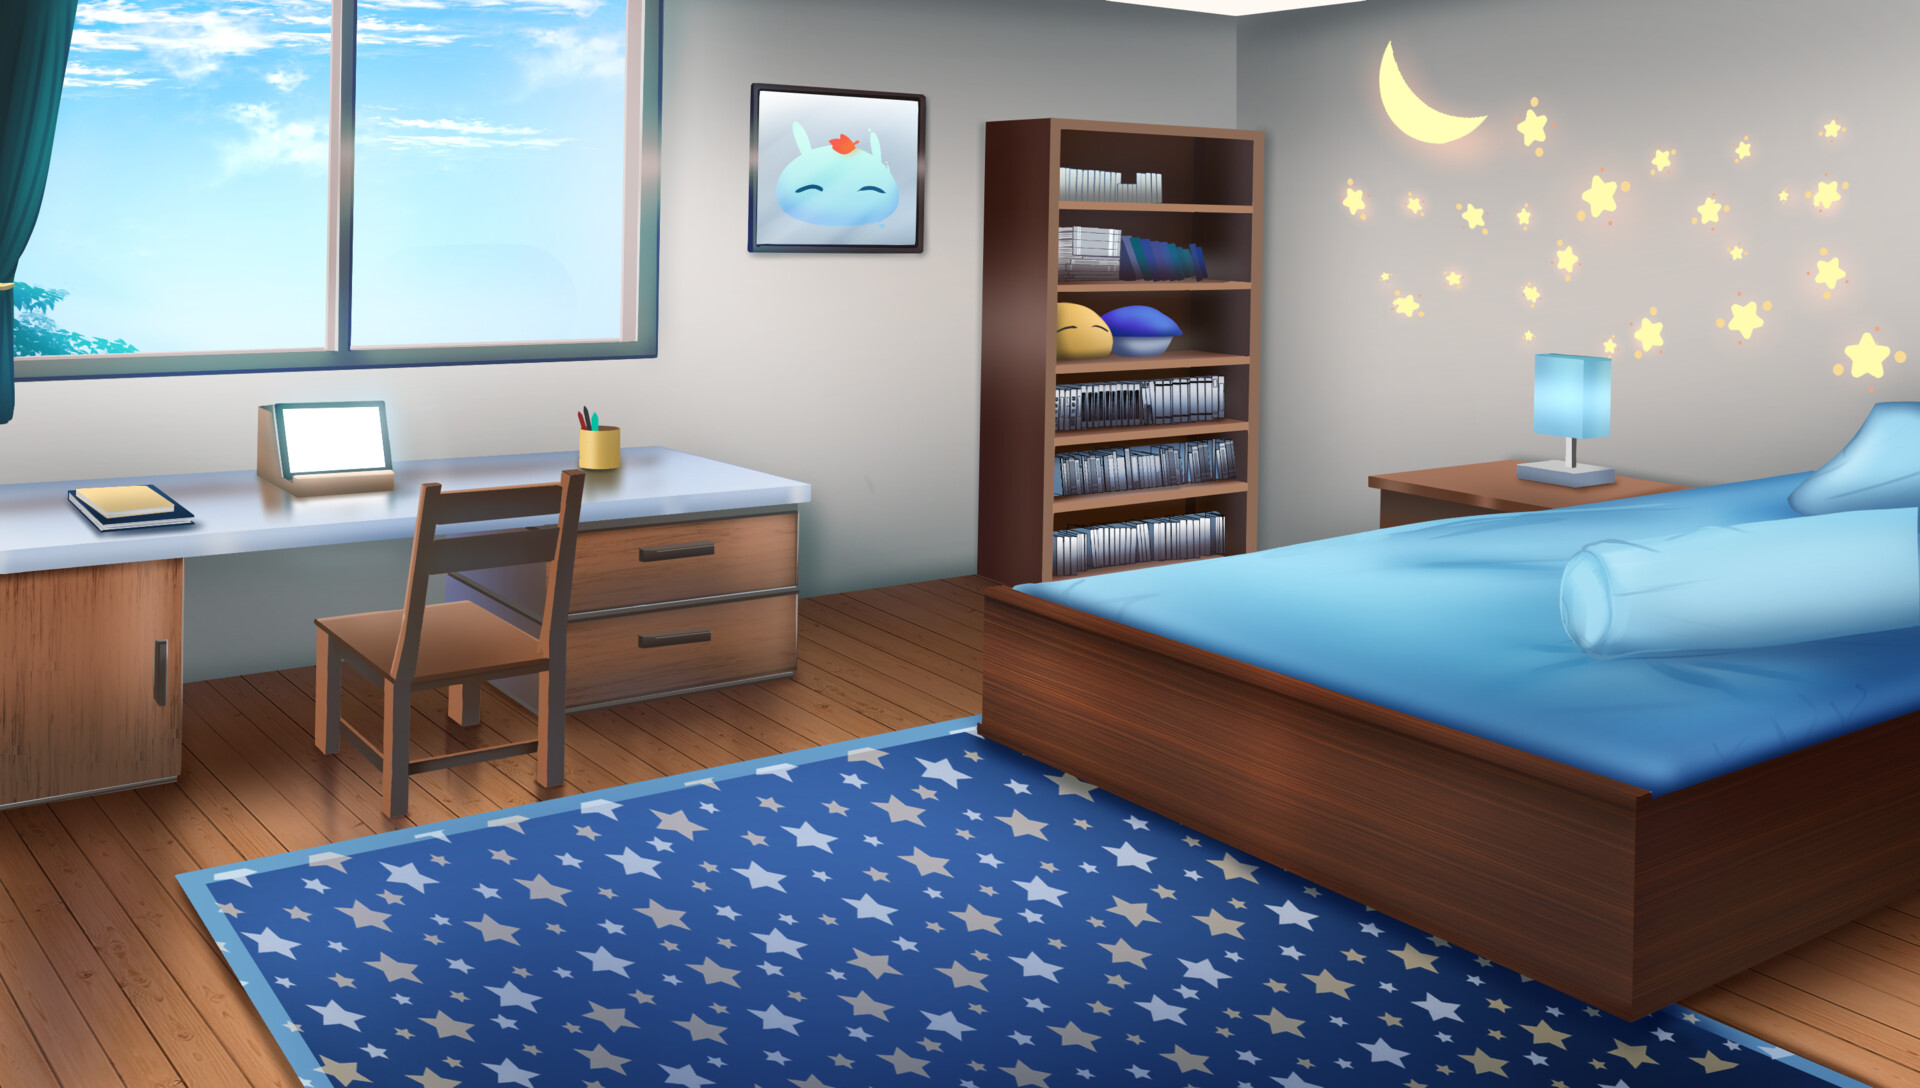 21 Stylish Anime Bedroom Decor Ideas in 2023  Bedroom design Anime  bedroom ideas Cool rooms